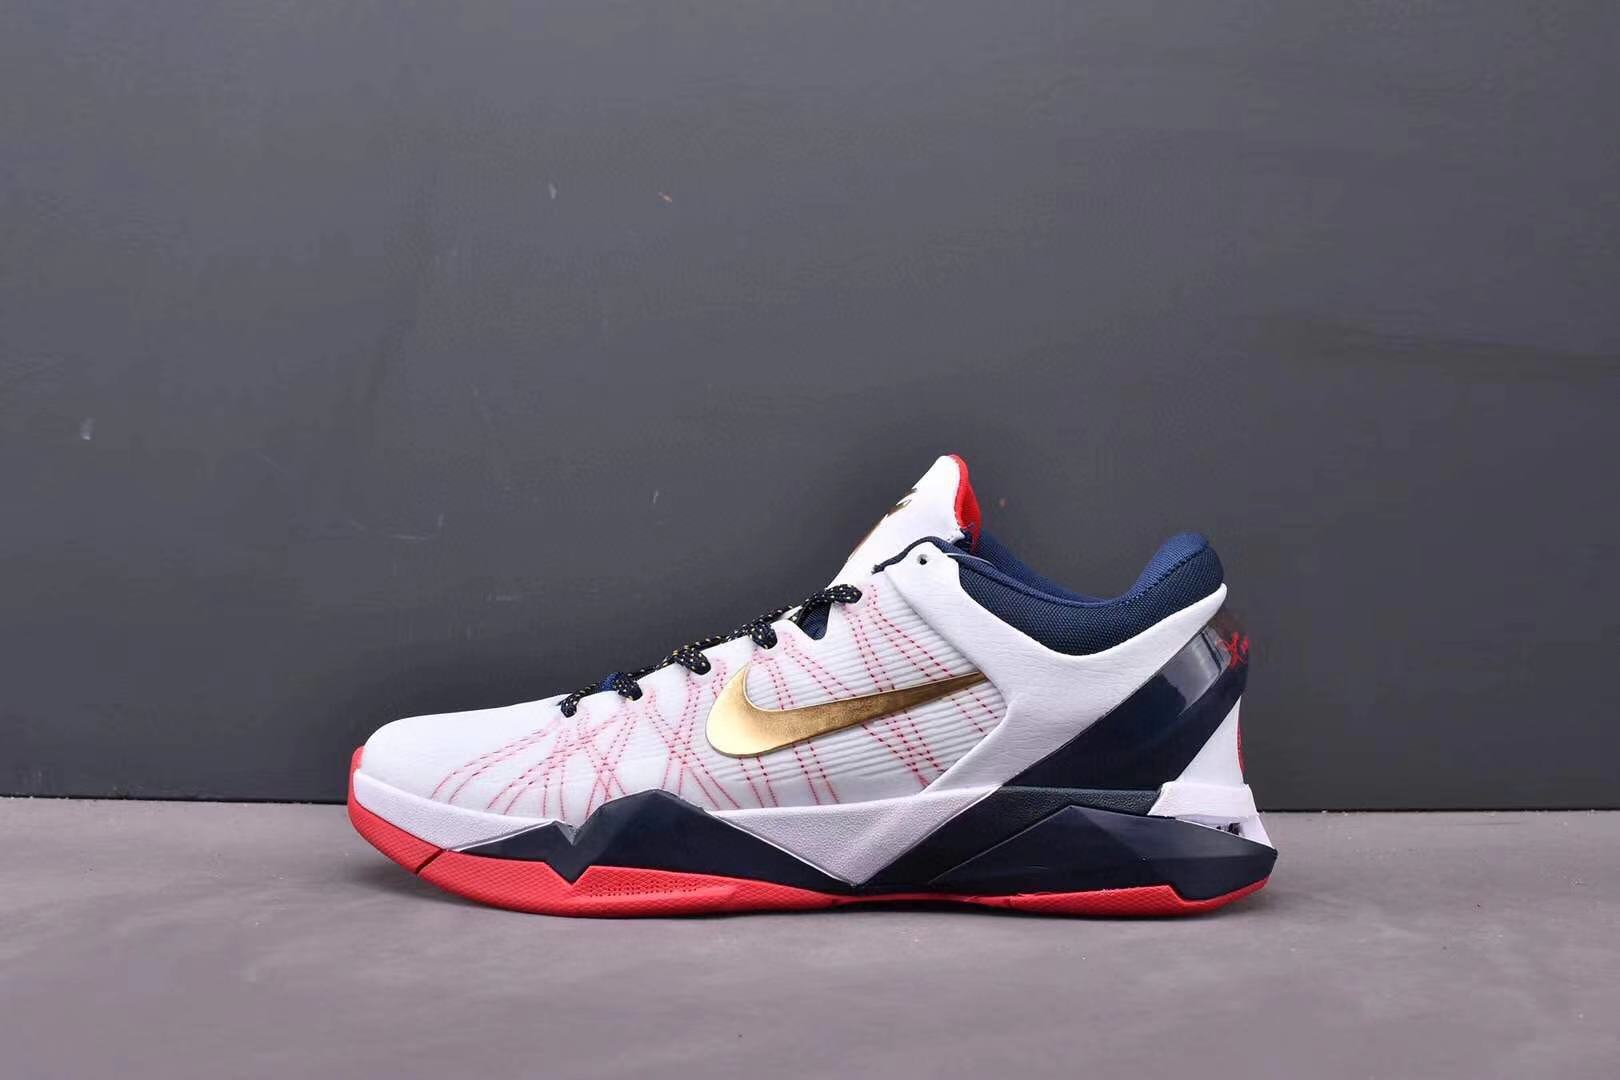 Zoom Kobe 7 System 'Gold Medal' - Nike - 488371 104 - white